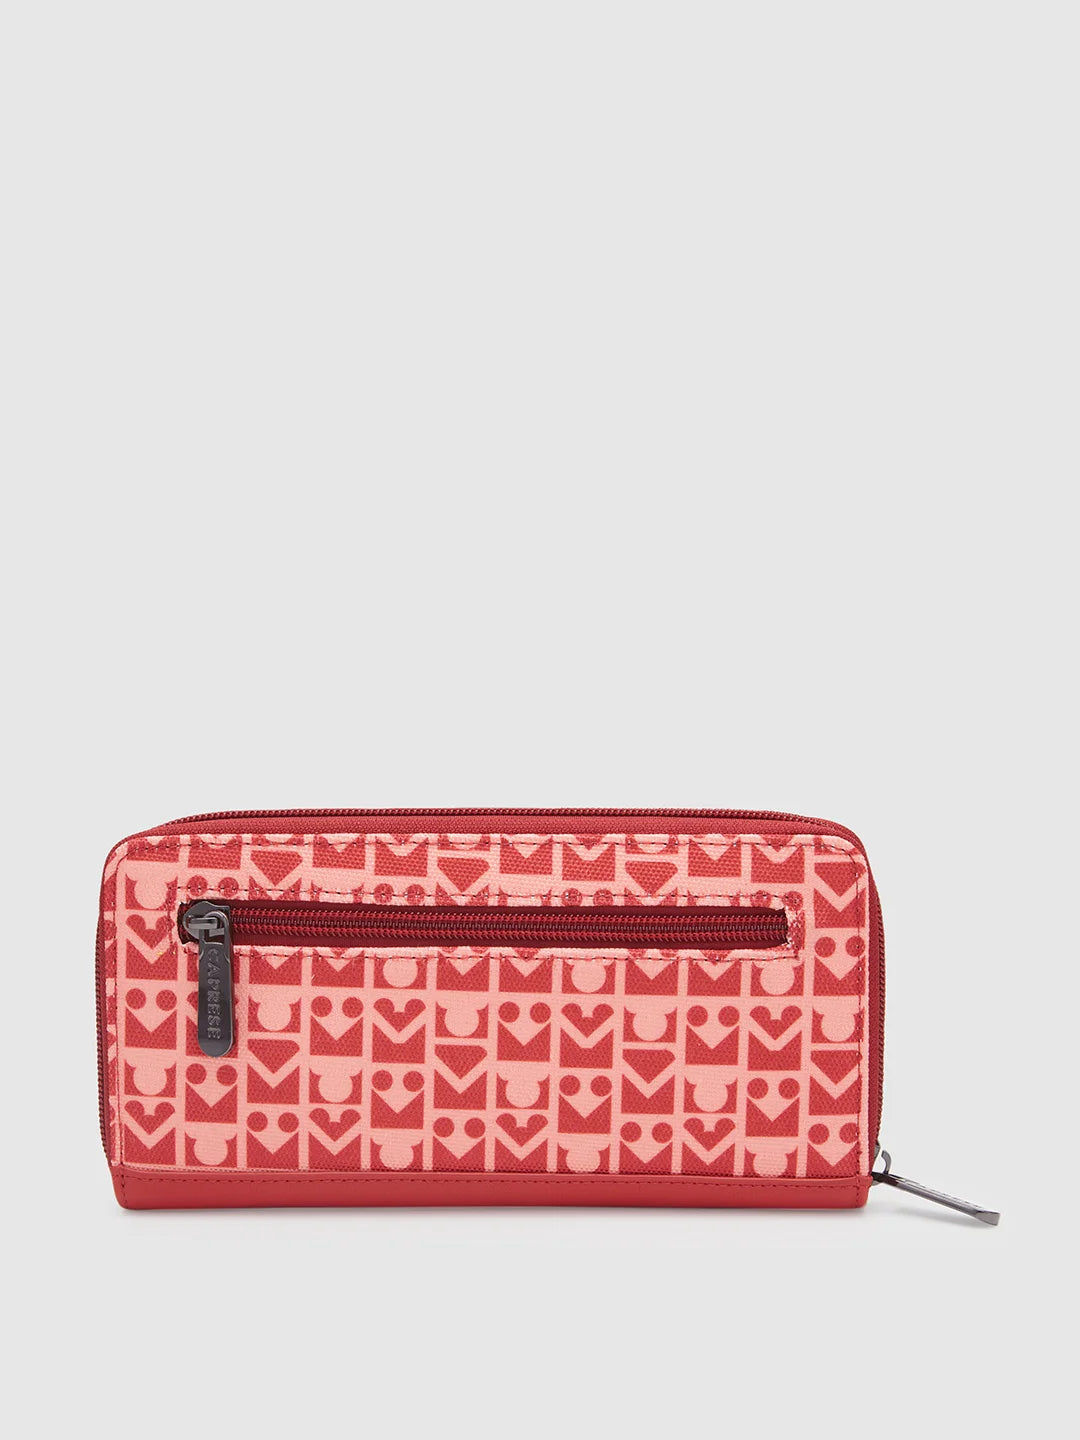 Caprese Disney Inspired Graphic Printed Mickey Mouse Collection Wallet Medium Handbag